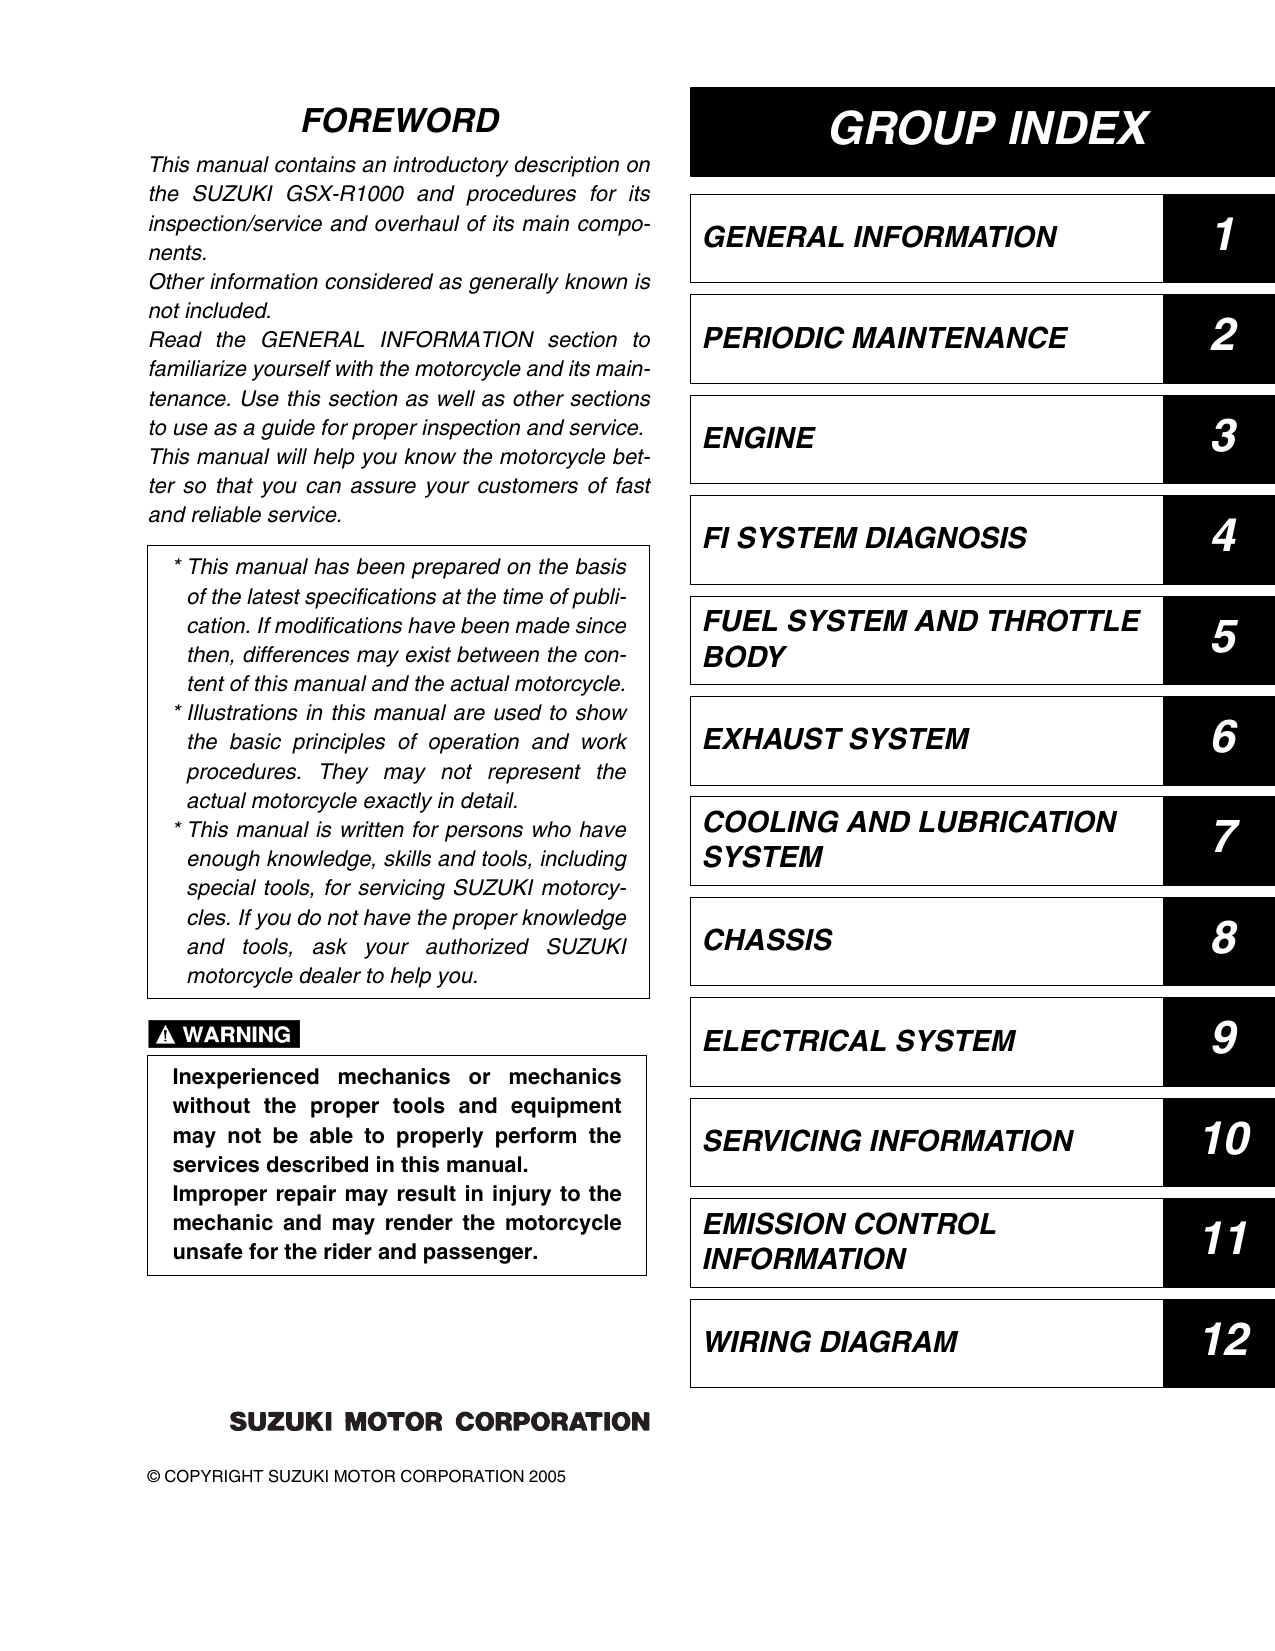 2005-2006 Suzuki GSX-R1000 repair manual Preview image 2